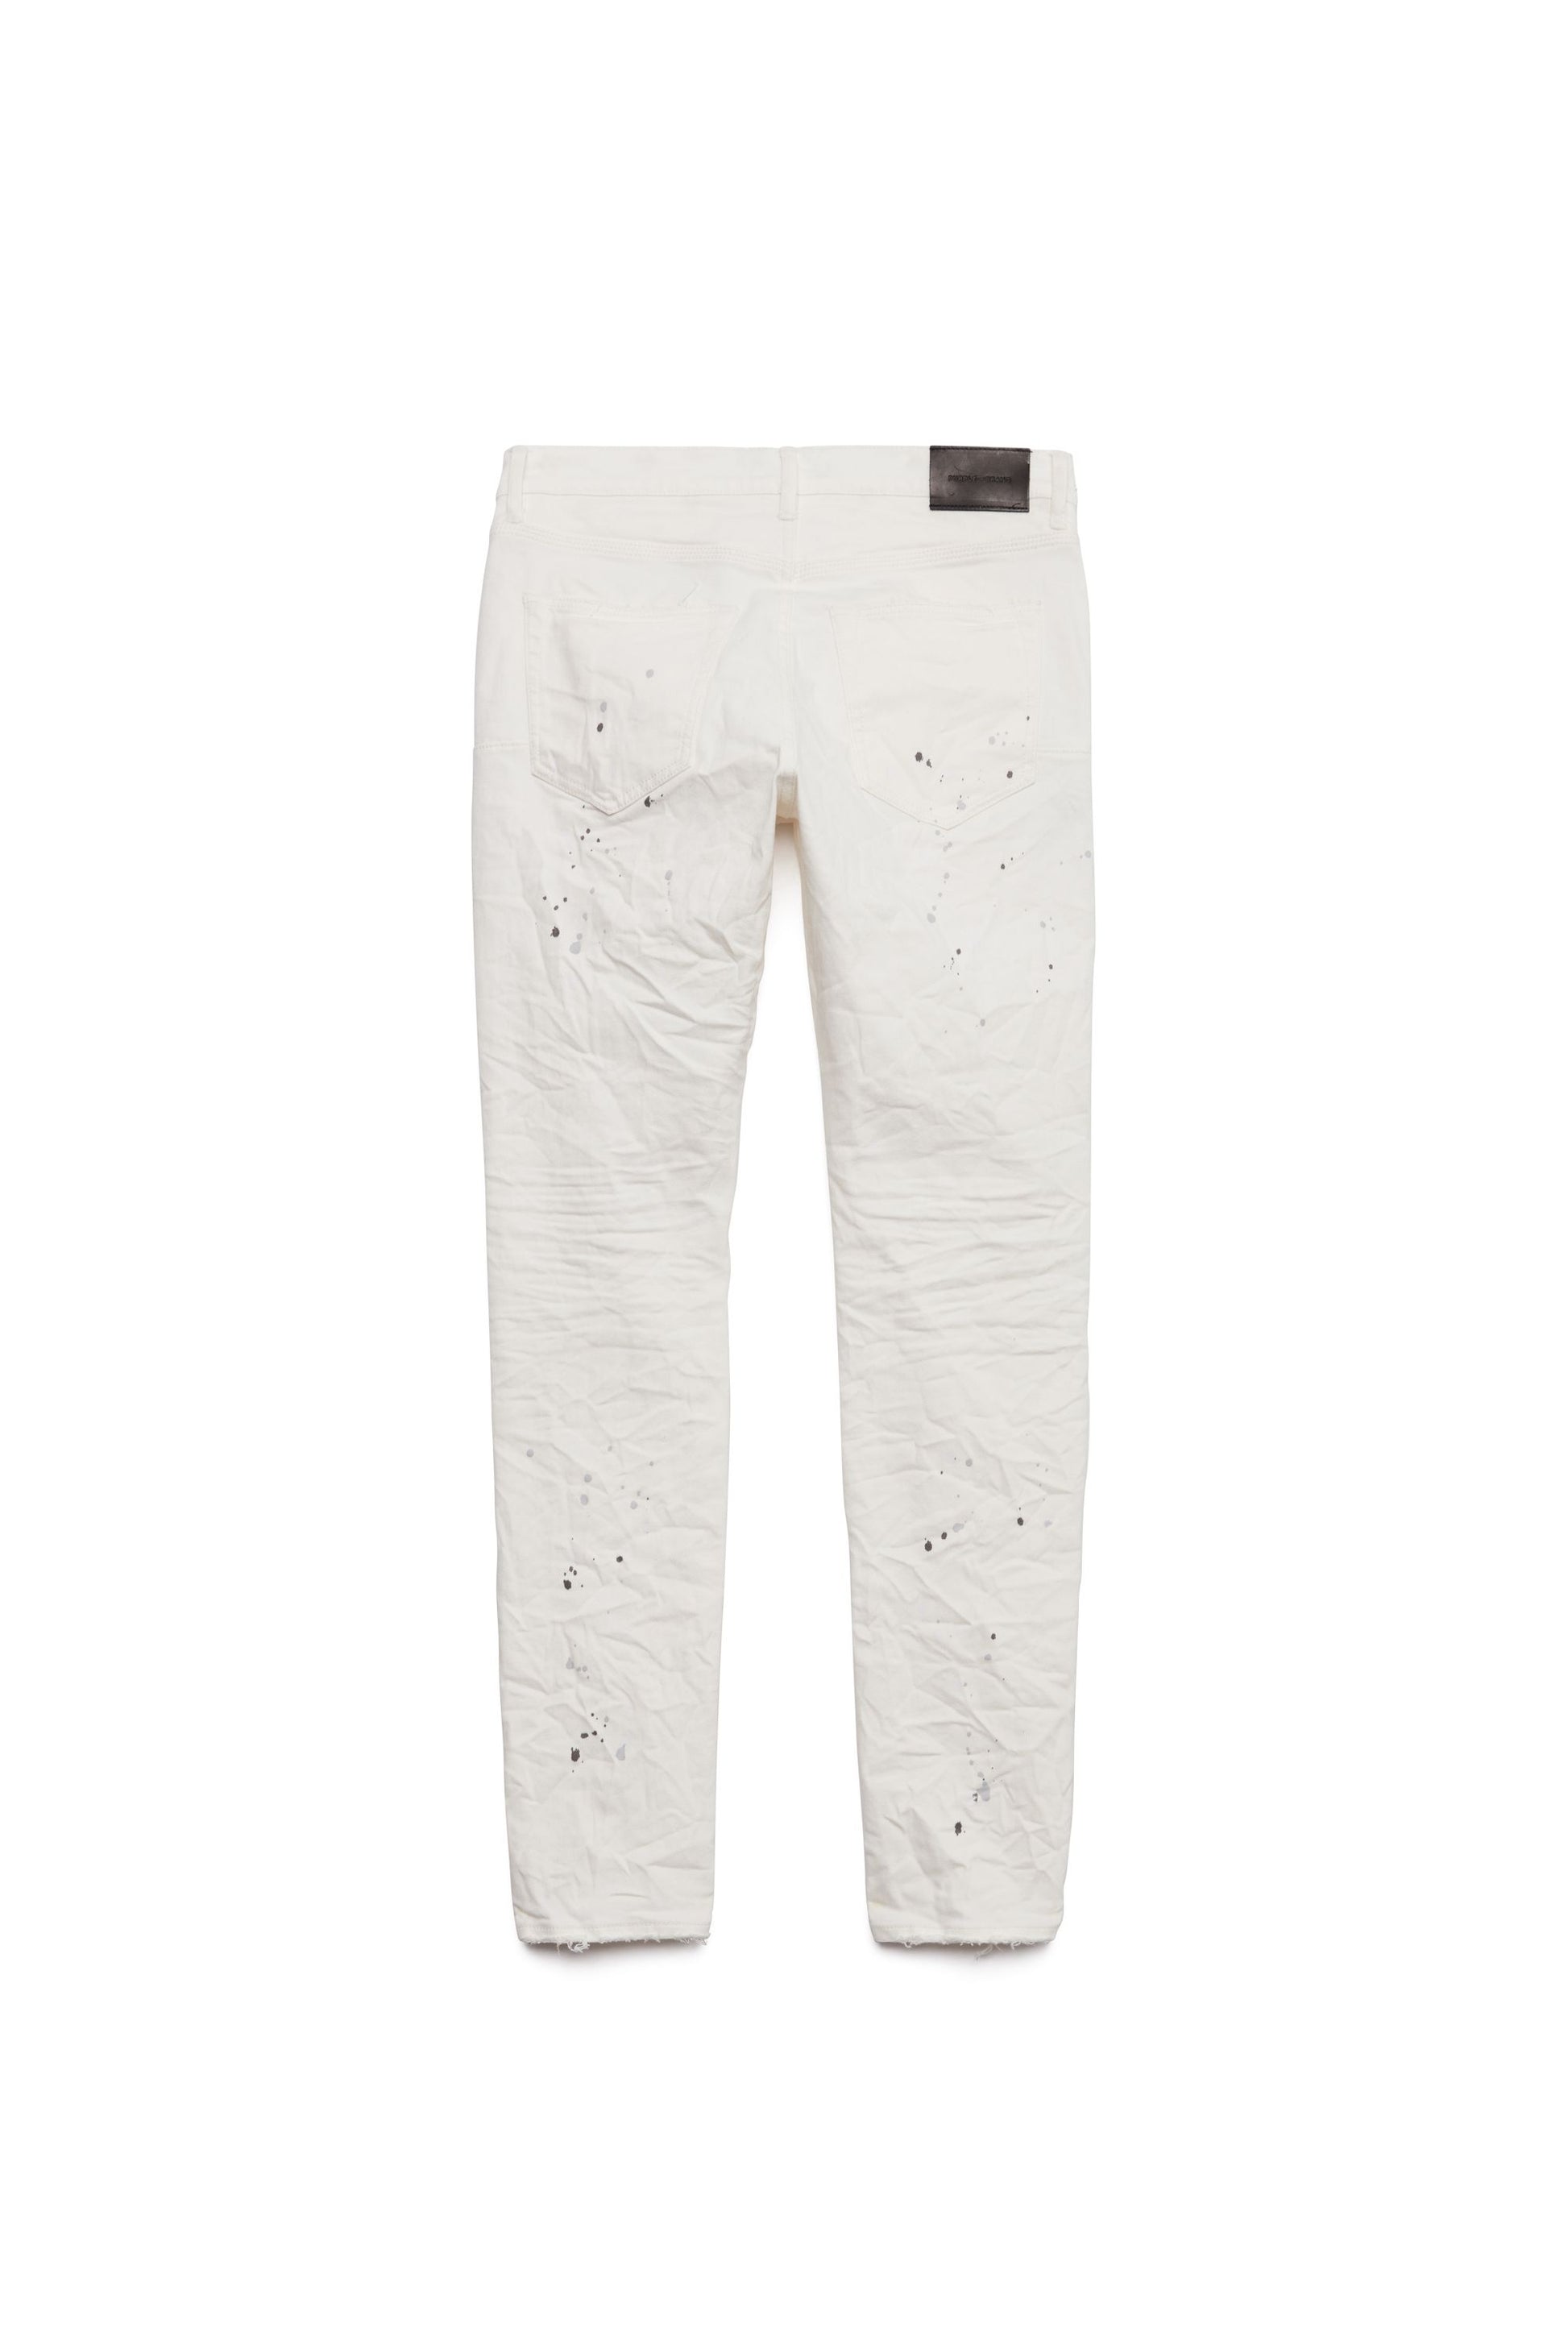 PURPLE BRAND - Men's Denim Jean - Low Rise Skinny - Style No. P001 - Optic White Paint Blowout - Back